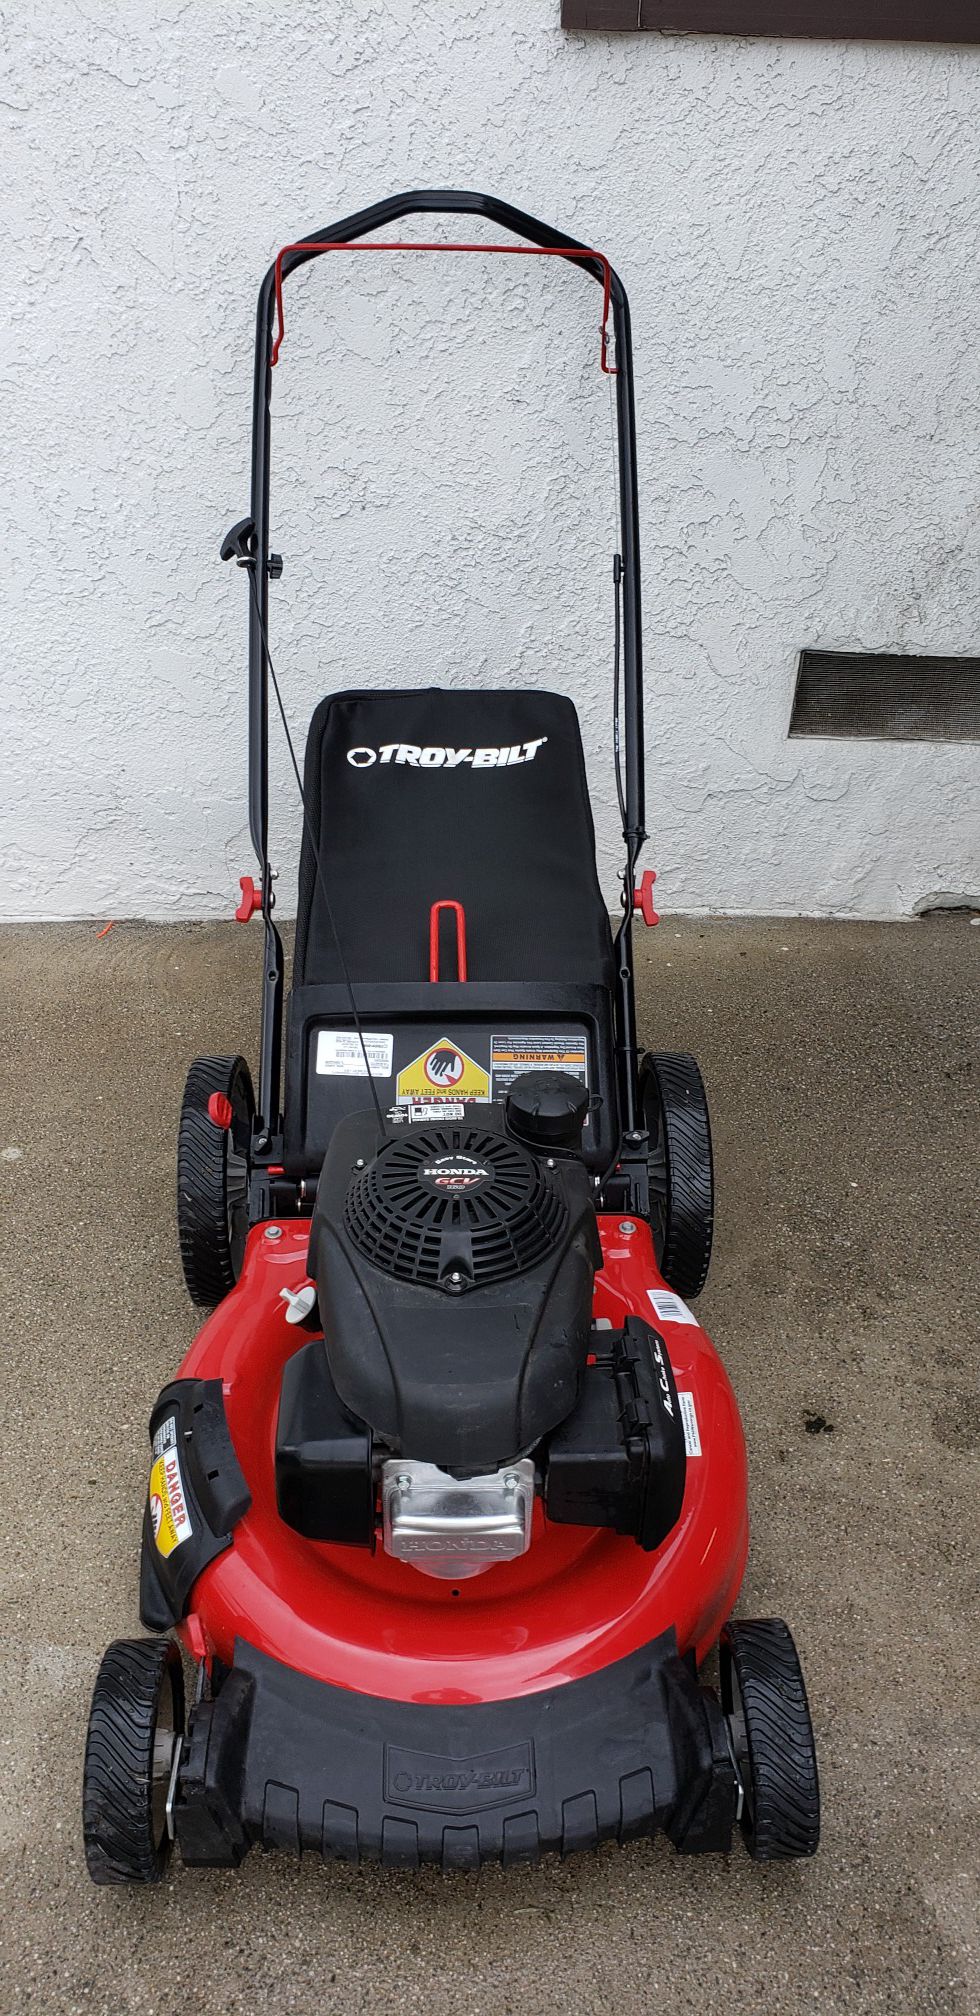 Troy bilt TB160 push lawn mower with Honda GCV 160 motor